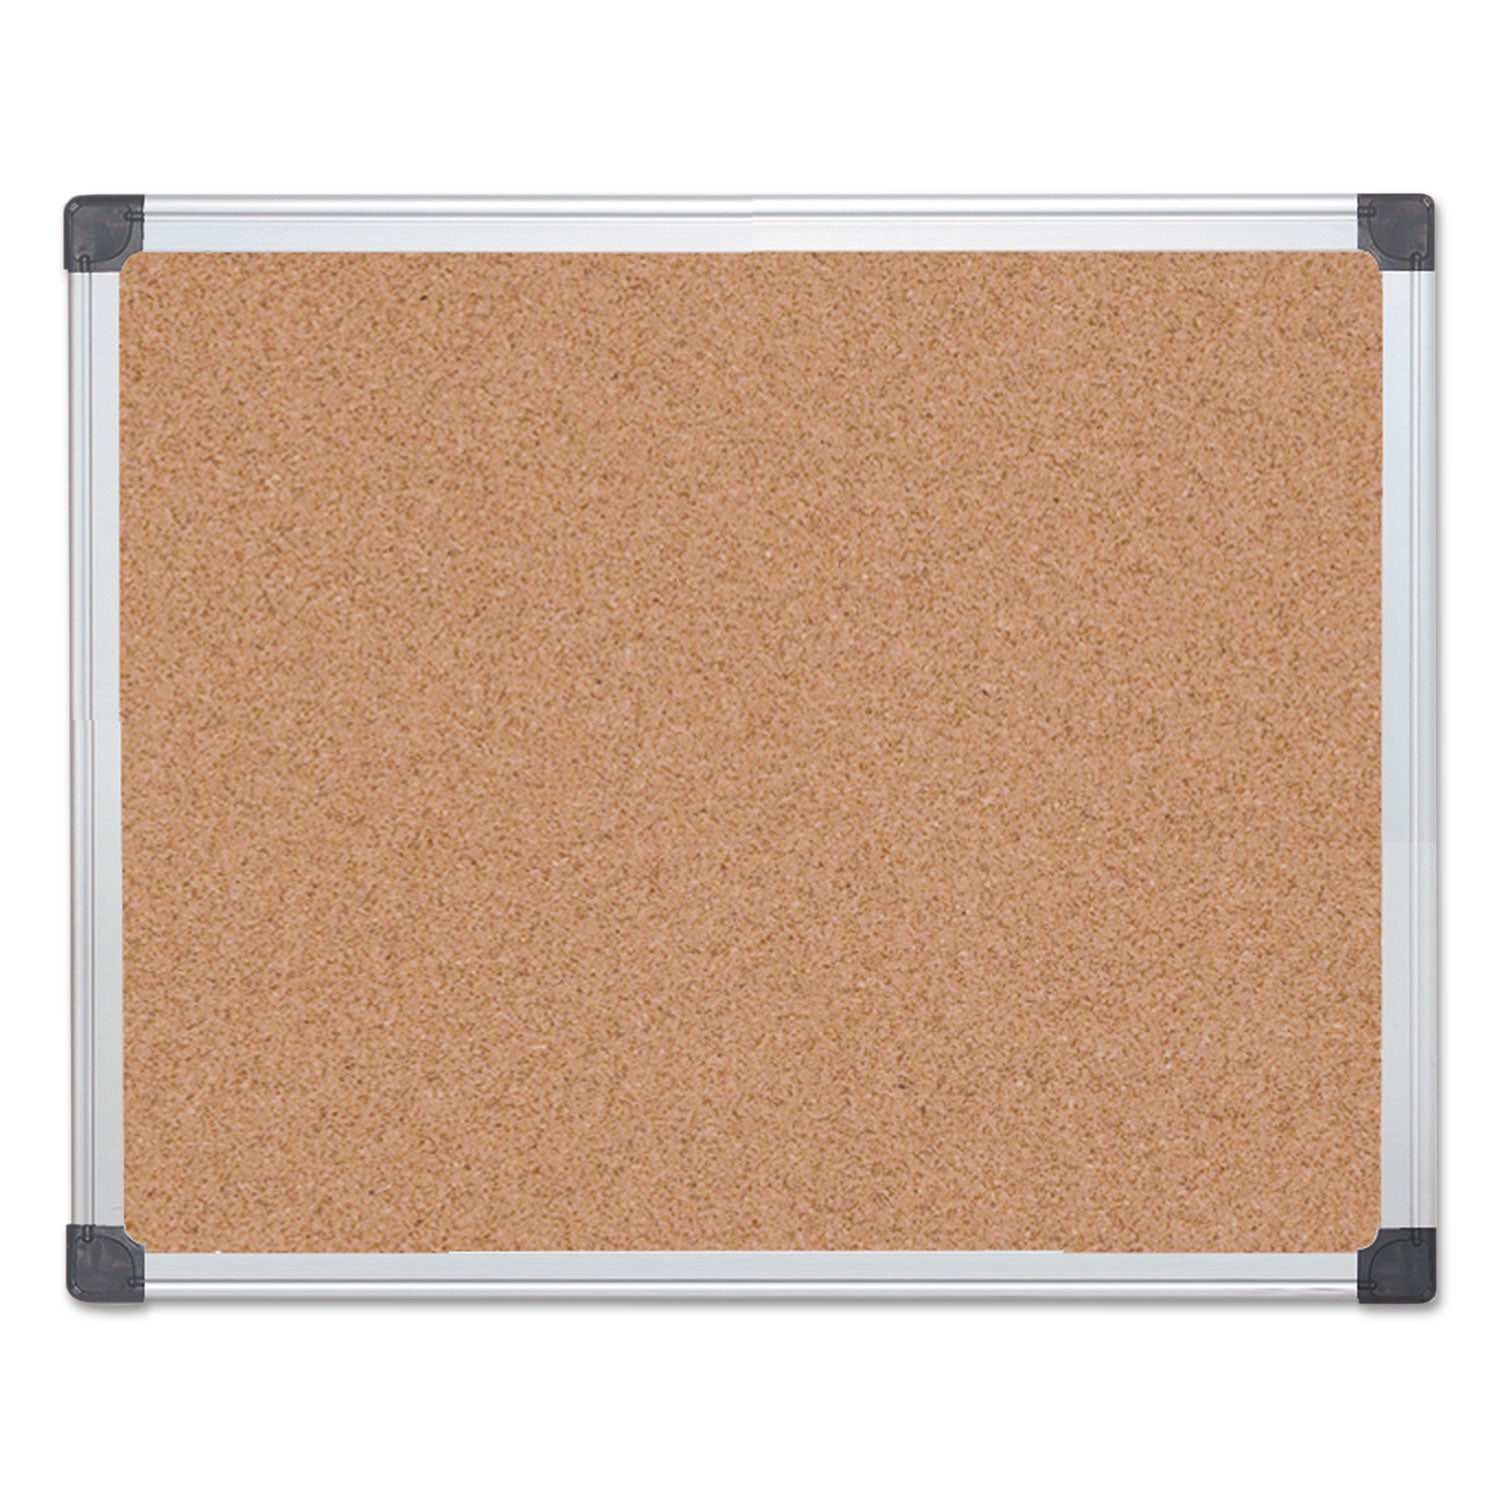 Value Cork Bulletin Board with Aluminum Frame, 24 x 36, Tan Surface, Silver Aluminum Frame - 